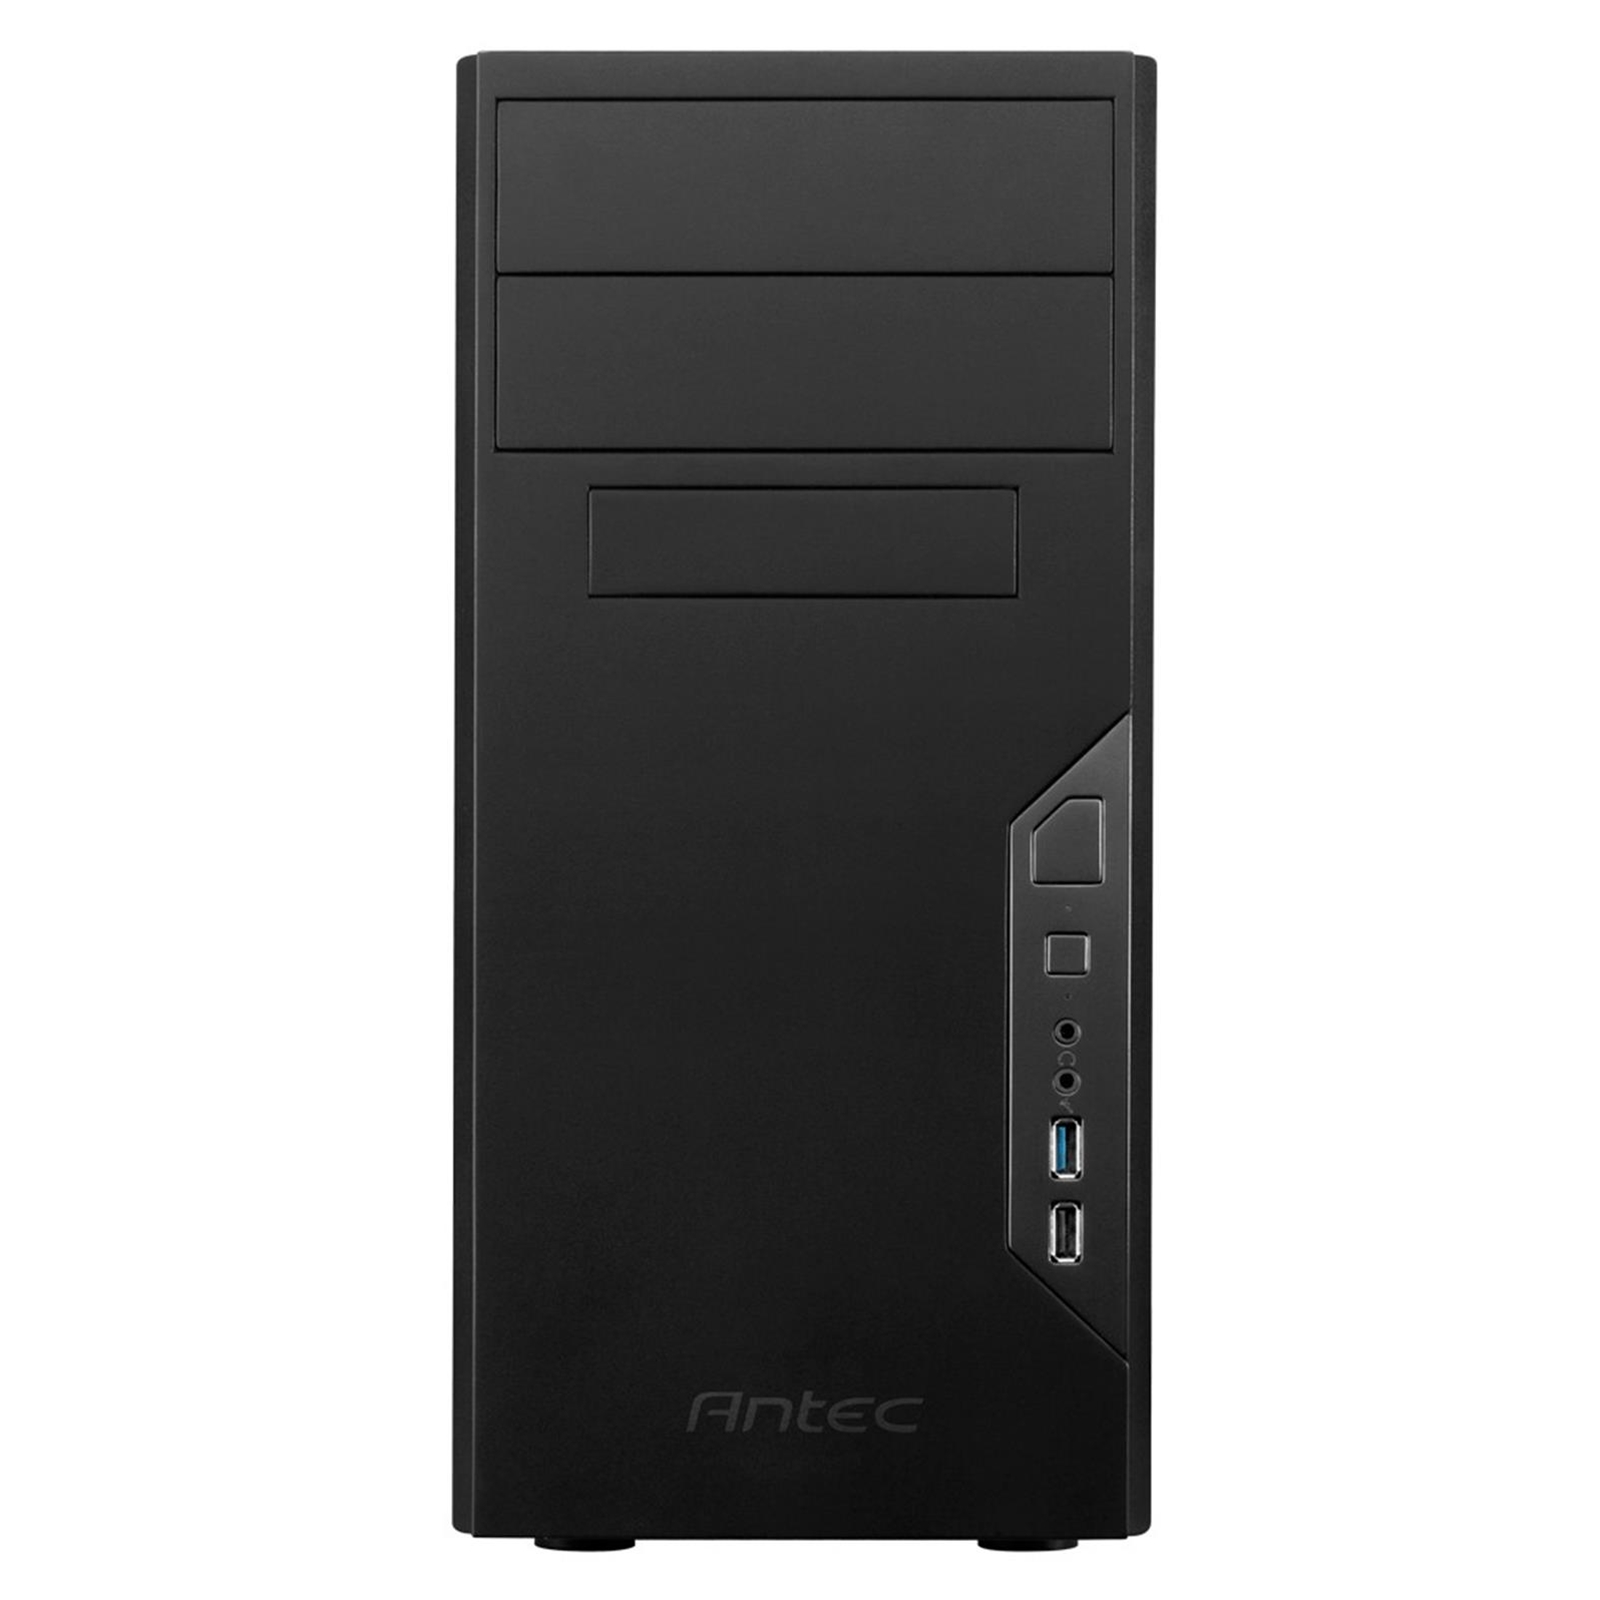 ANTEC VSK-3000B-U3/U2 Case, Home & Business, Black, Micro Tower, 1 x USB 3.0 / 1 x USB 2.0, Micro ATX, Mini-ITX